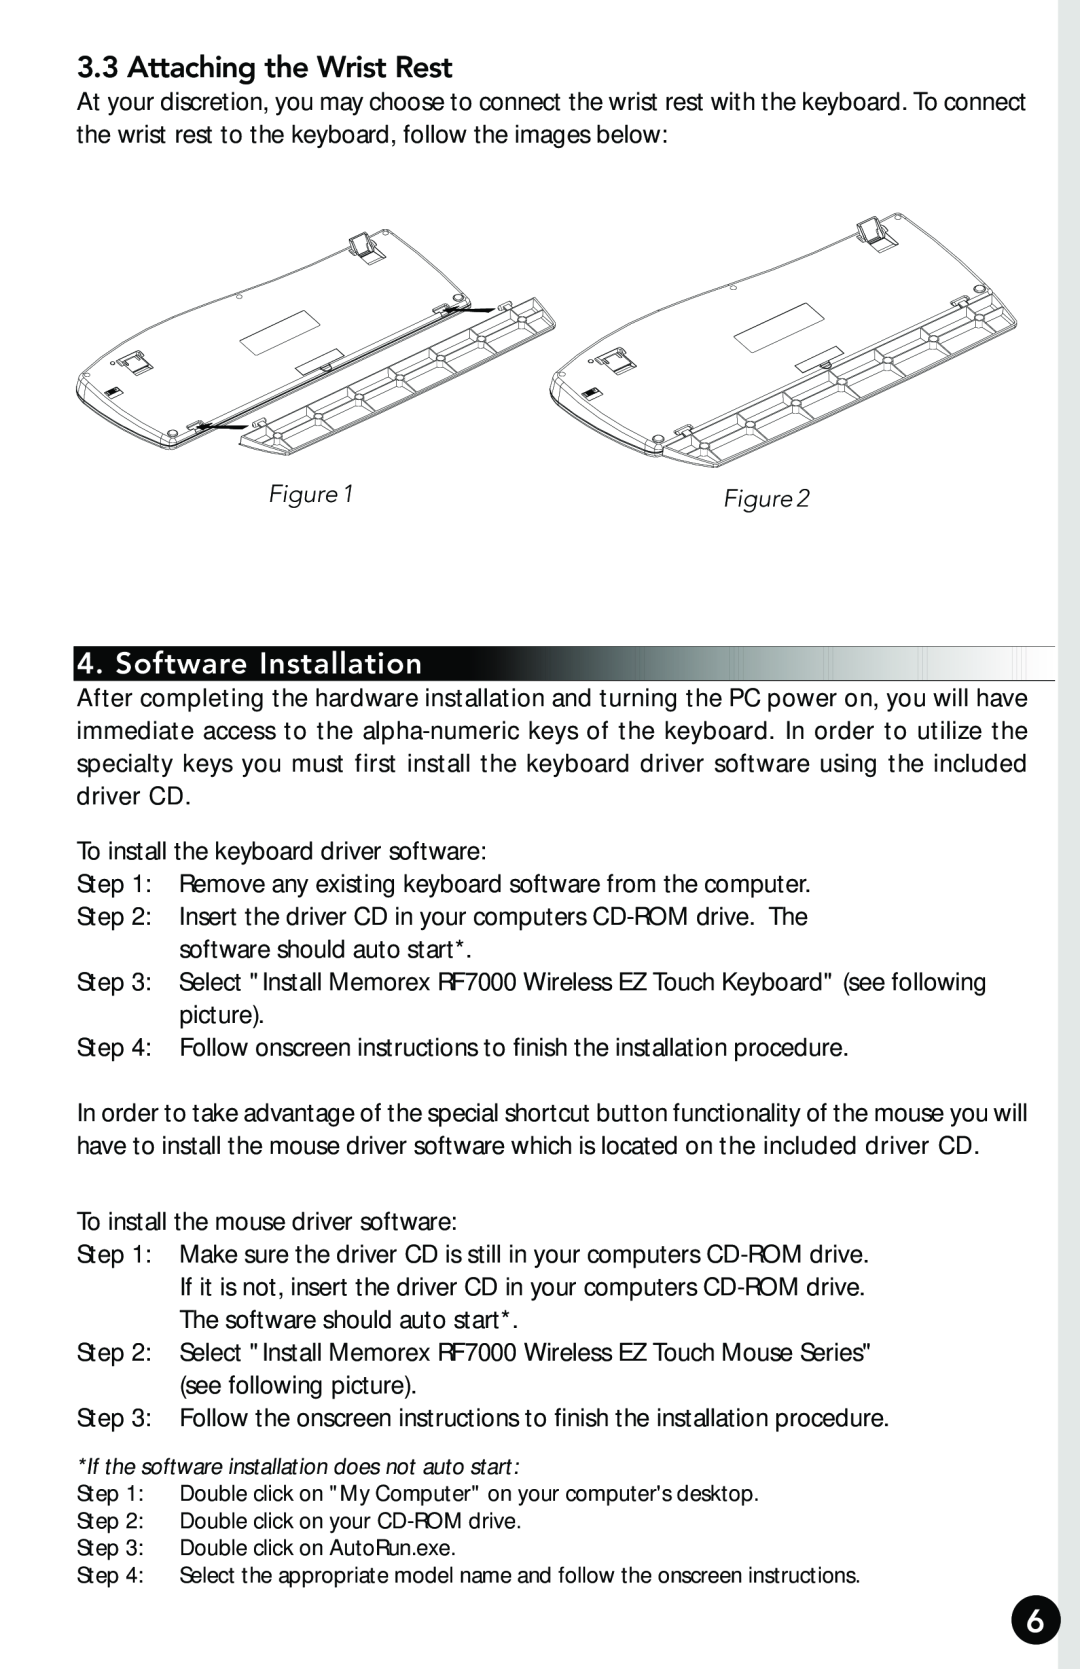 Memorex RF7000 manual Software Installation, Attaching the Wrist Rest 